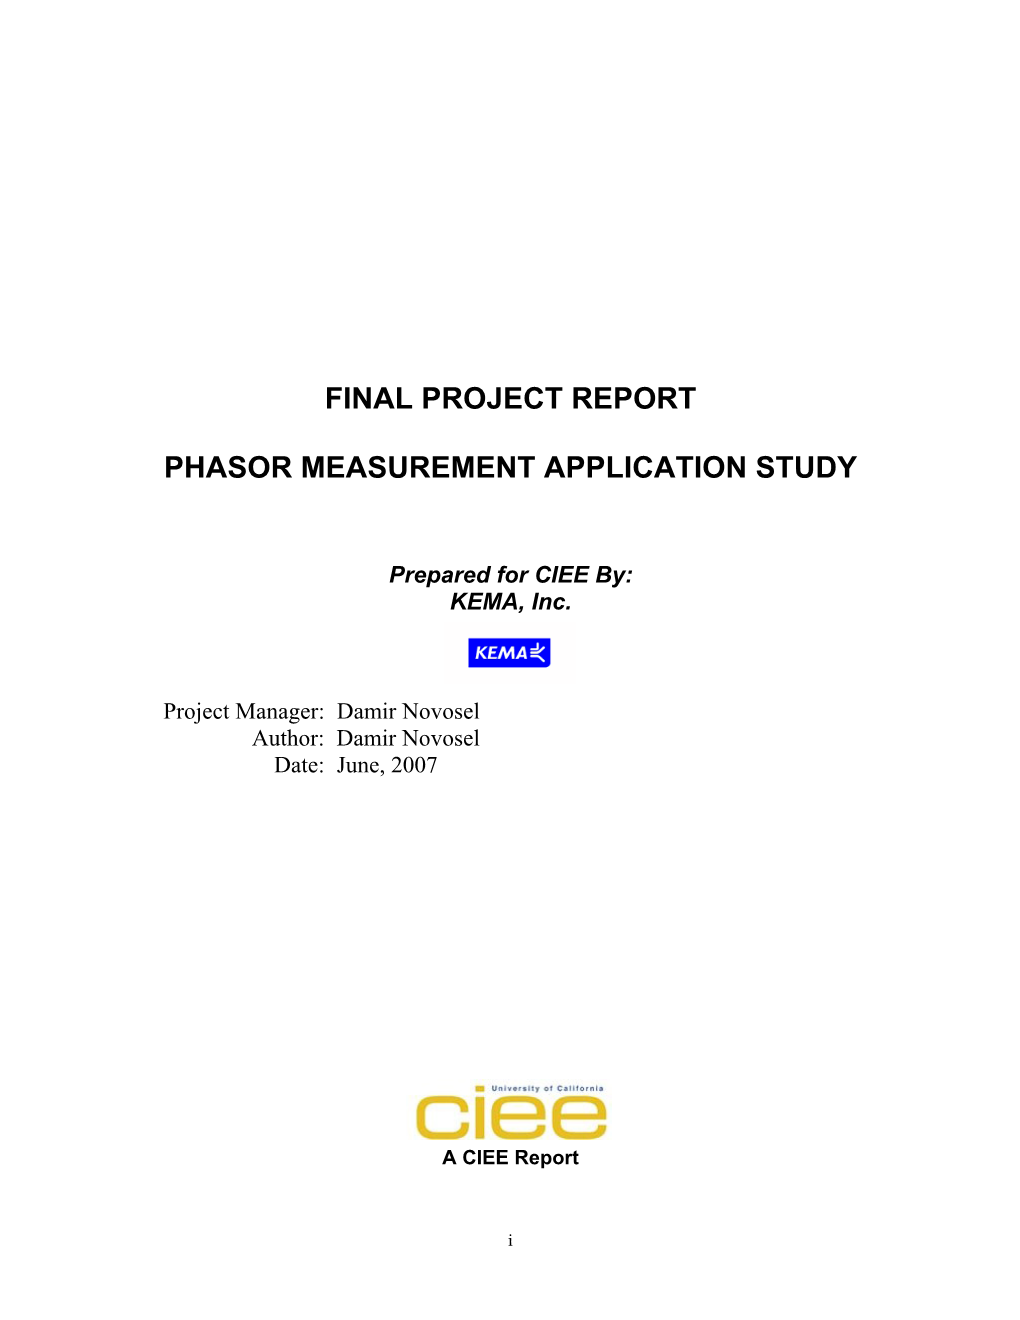 Final Project Report Phasor Measurement Application